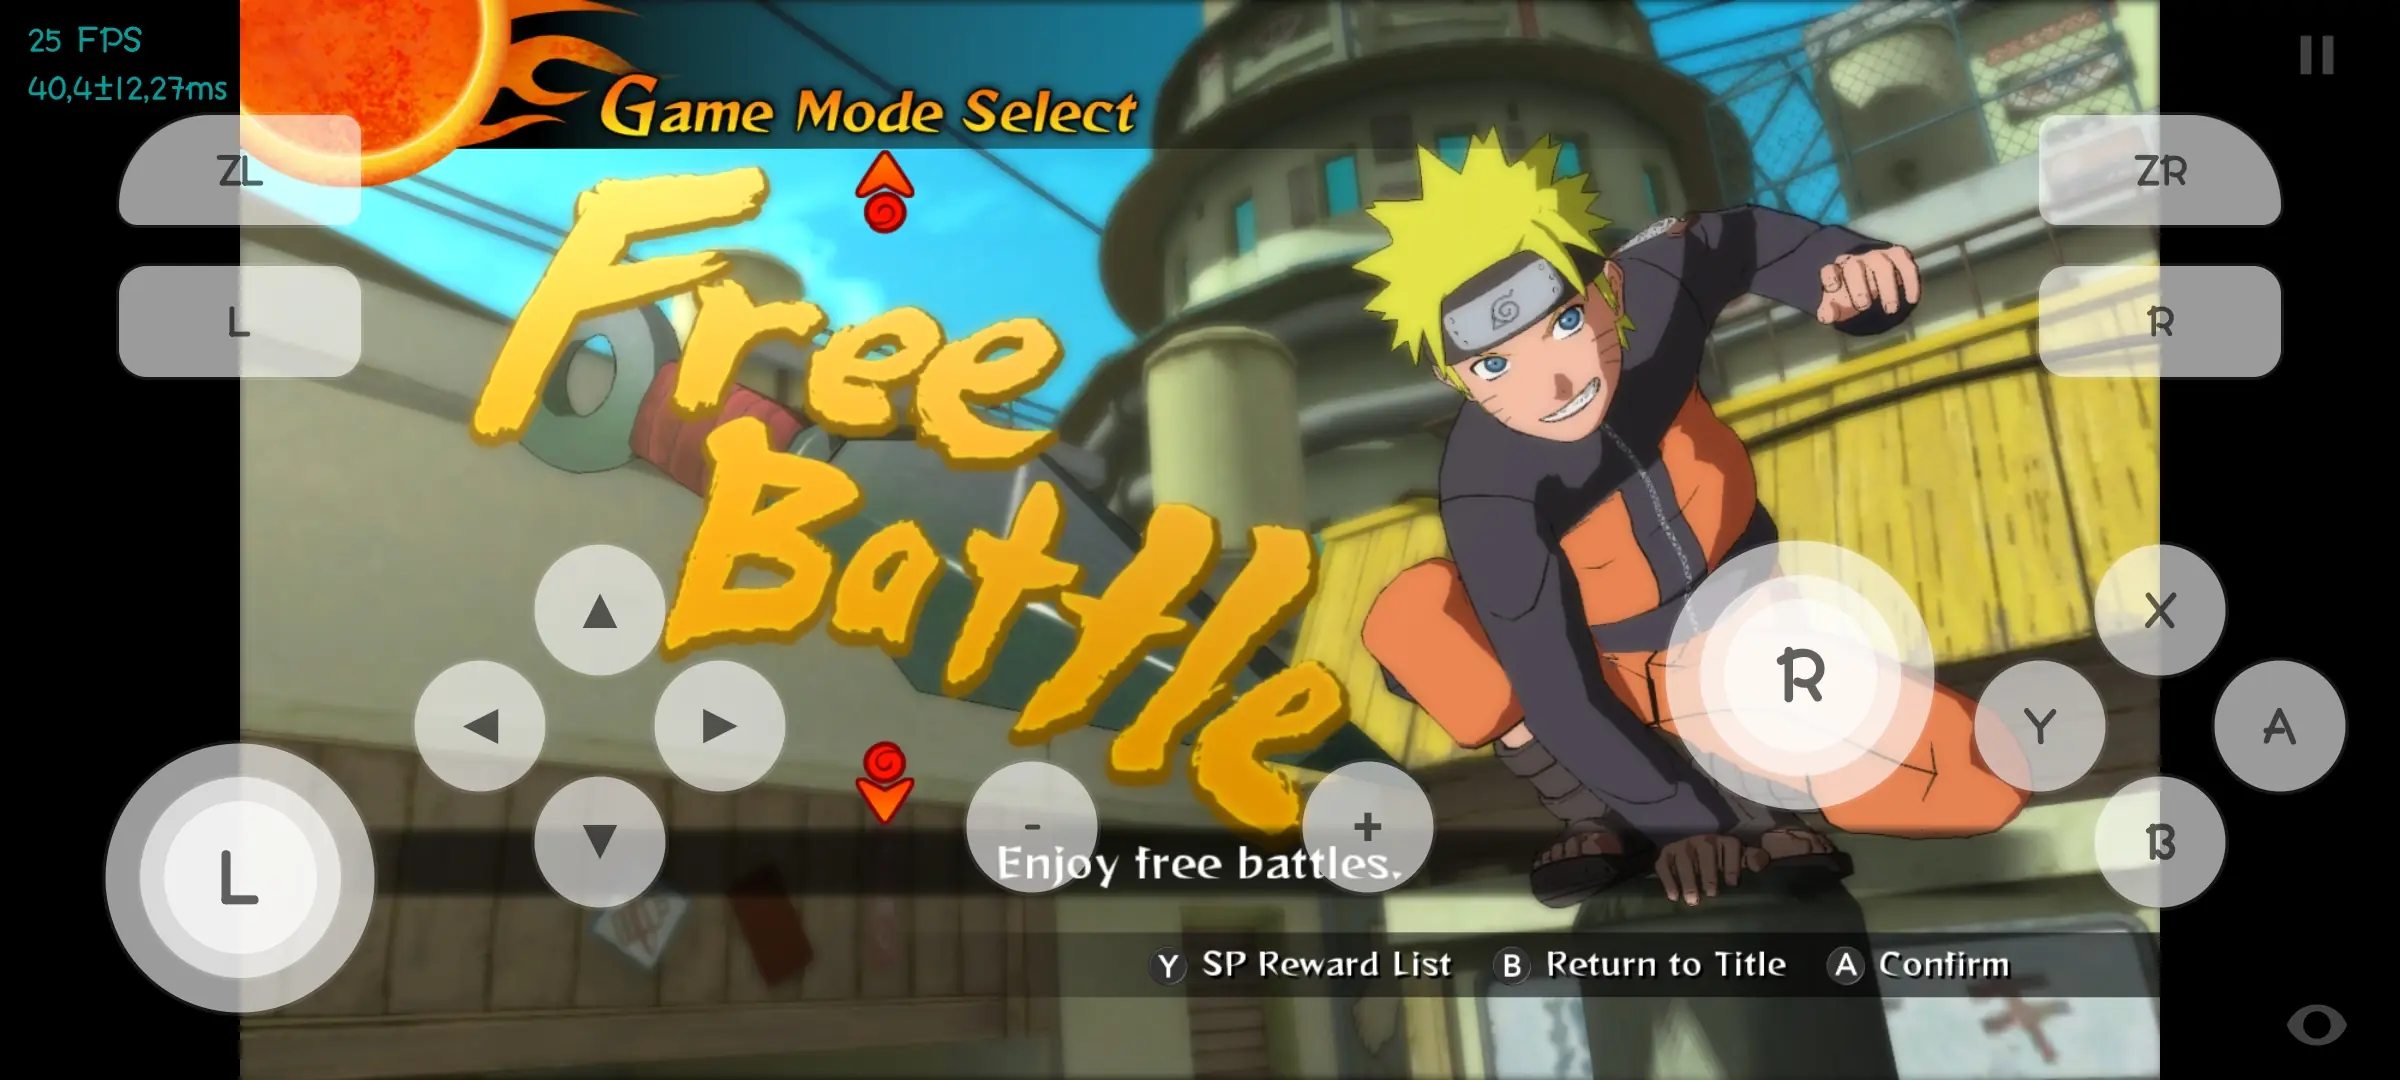 Naruto Shippuden Ultimate Ninja Storm 2 Free Download For Android - Skyline Edge Emulator